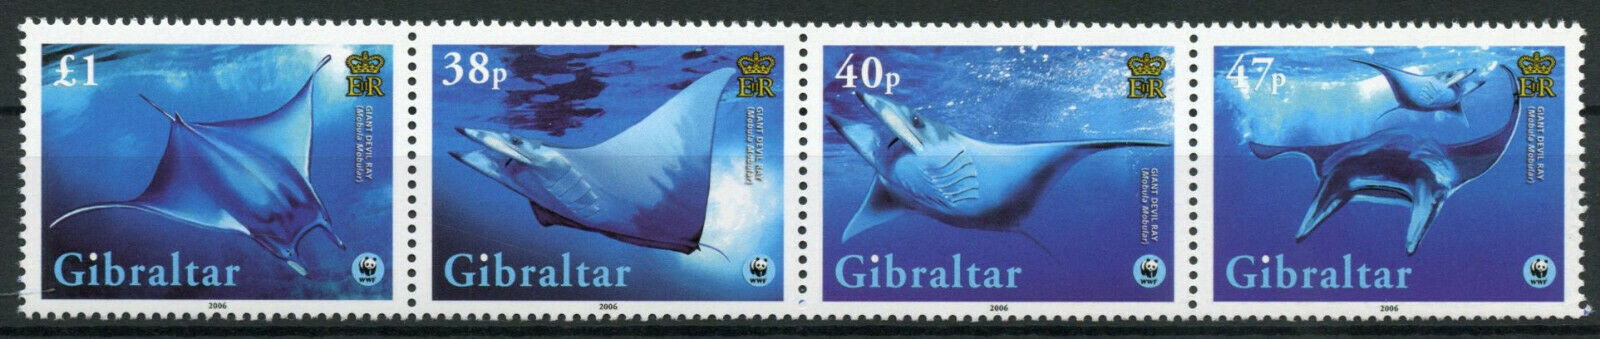 Gibraltar 2006 MNH Fish Stamps WWF Giant Devil Ray Endangered Species 4v Strip